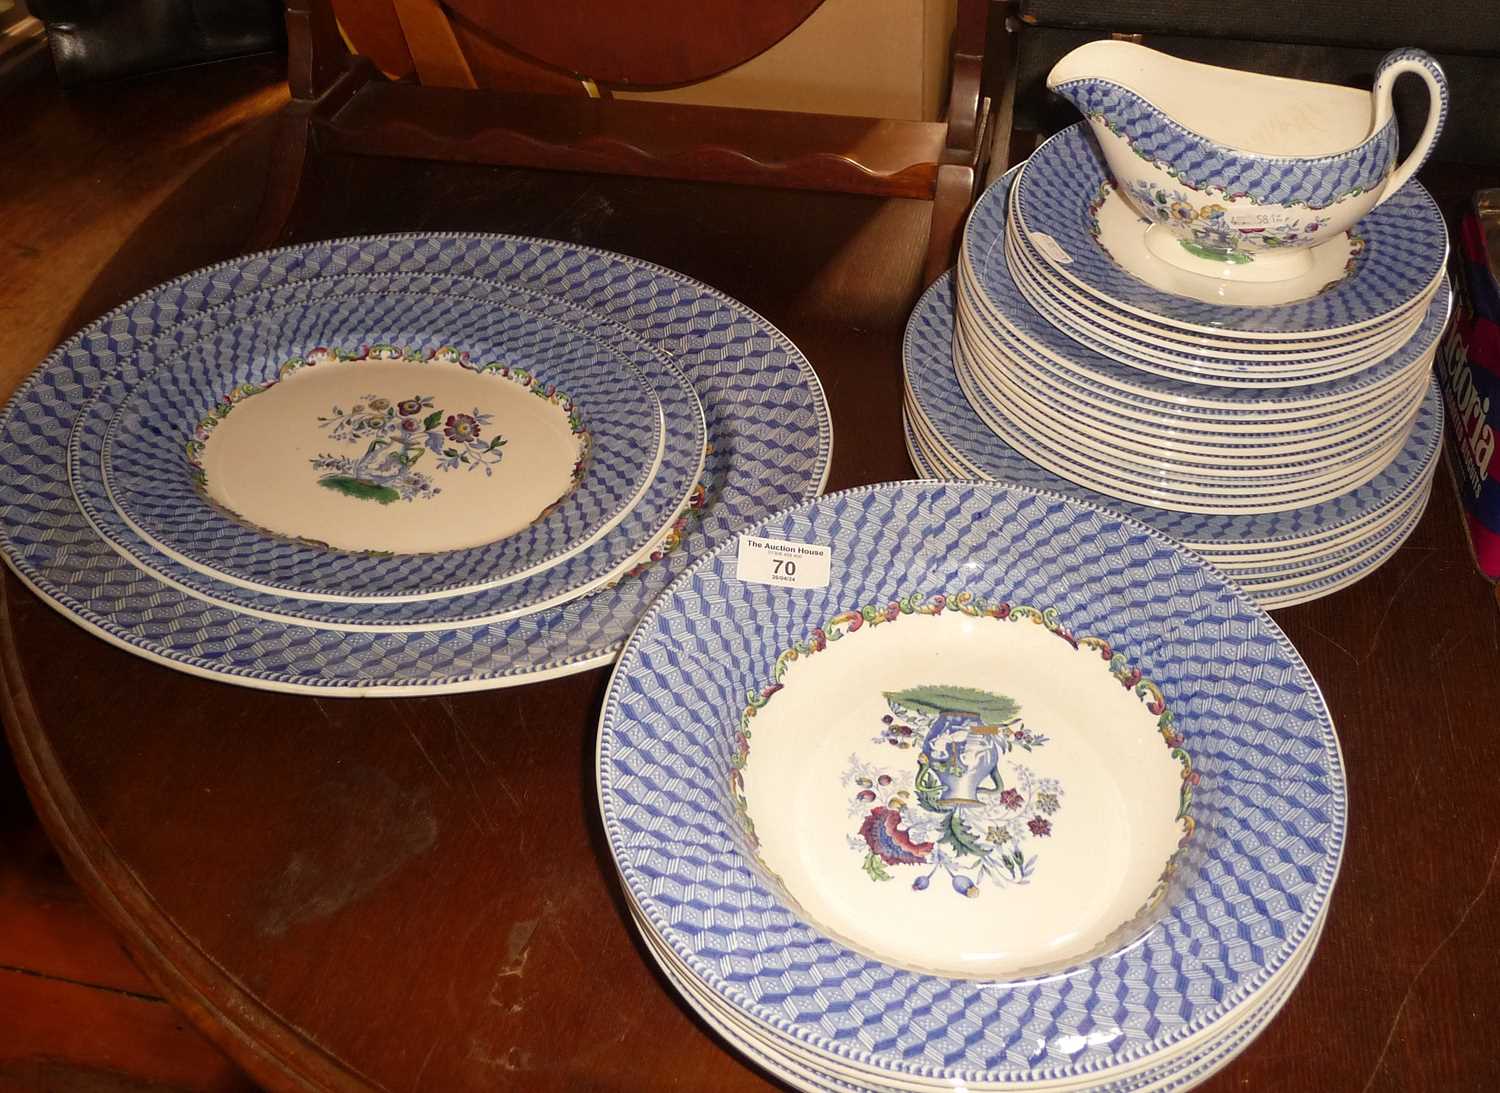 Copeland Spode "Portland Vase" dinnerware inc. plates, bowls, gravy boat and three meat platters